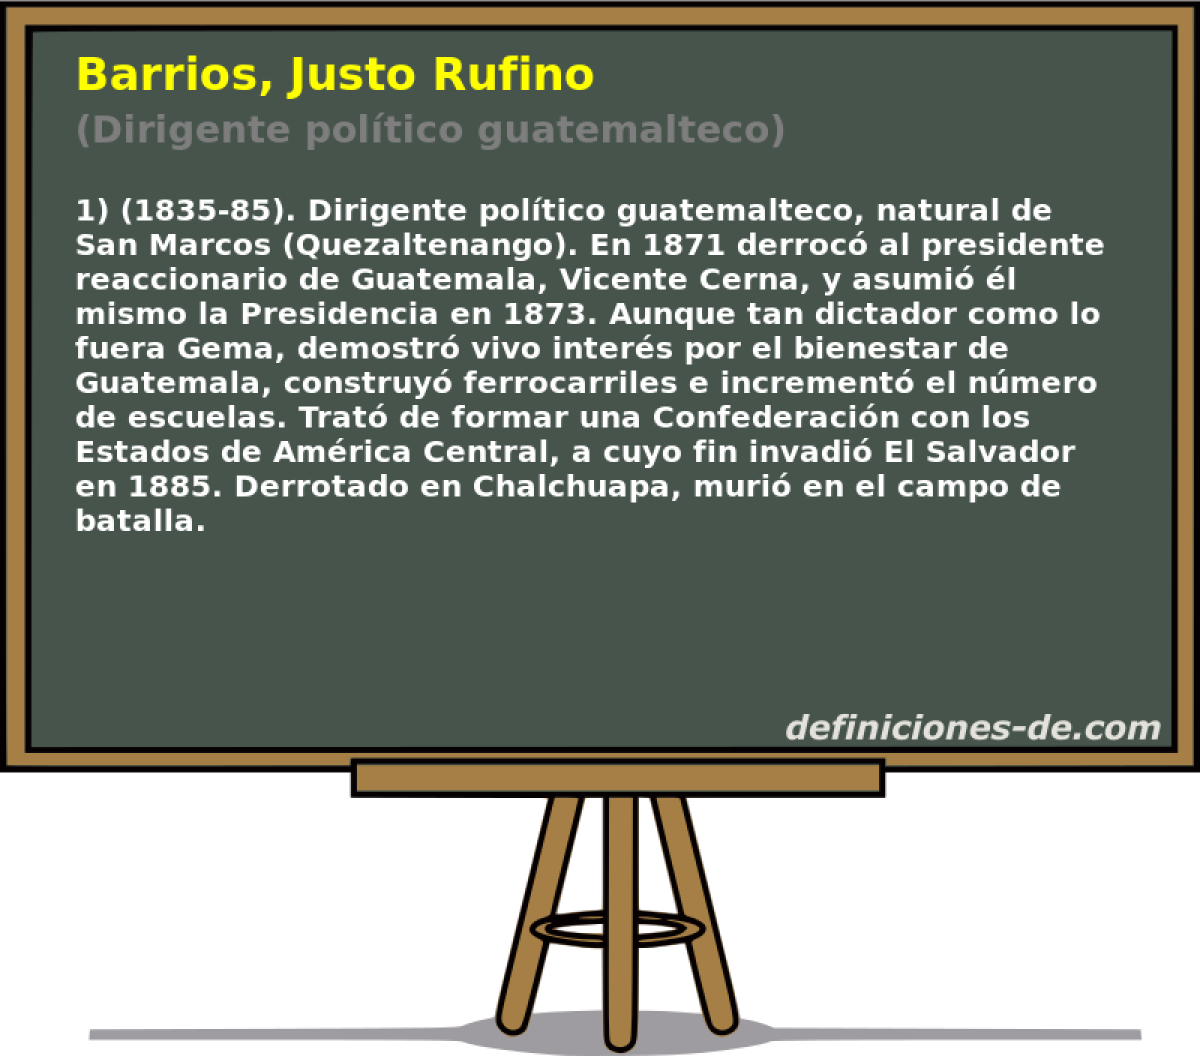 Barrios, Justo Rufino (Dirigente poltico guatemalteco)